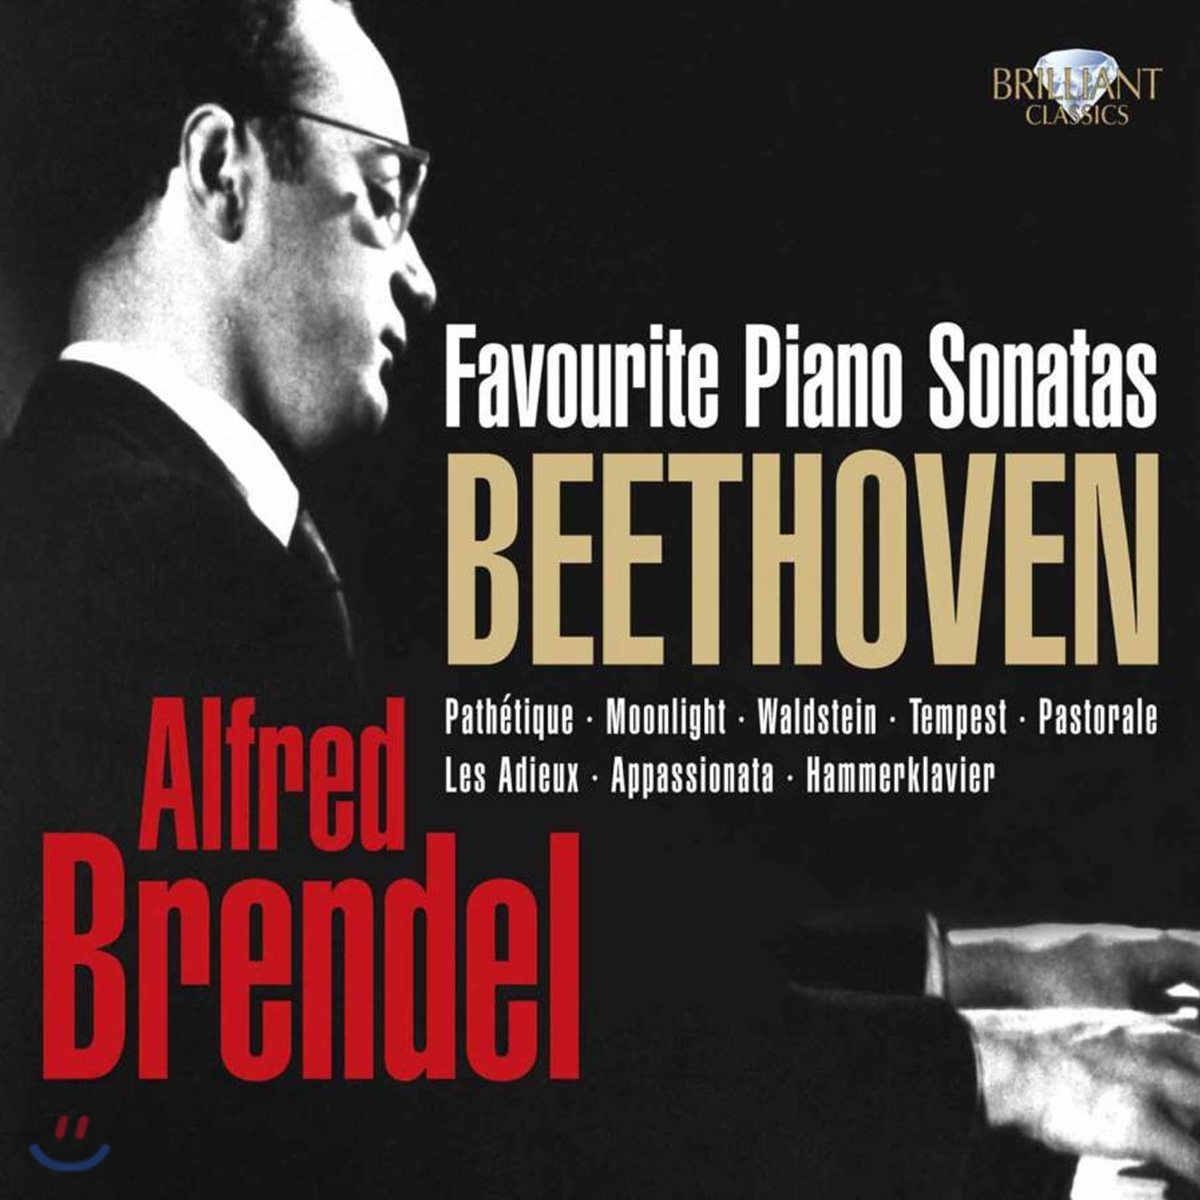 Alfred Brendel 베토벤: 피아노 소나타 - 알프레드 브렌델 (Beethoven: Favourite Piano Sonata) 